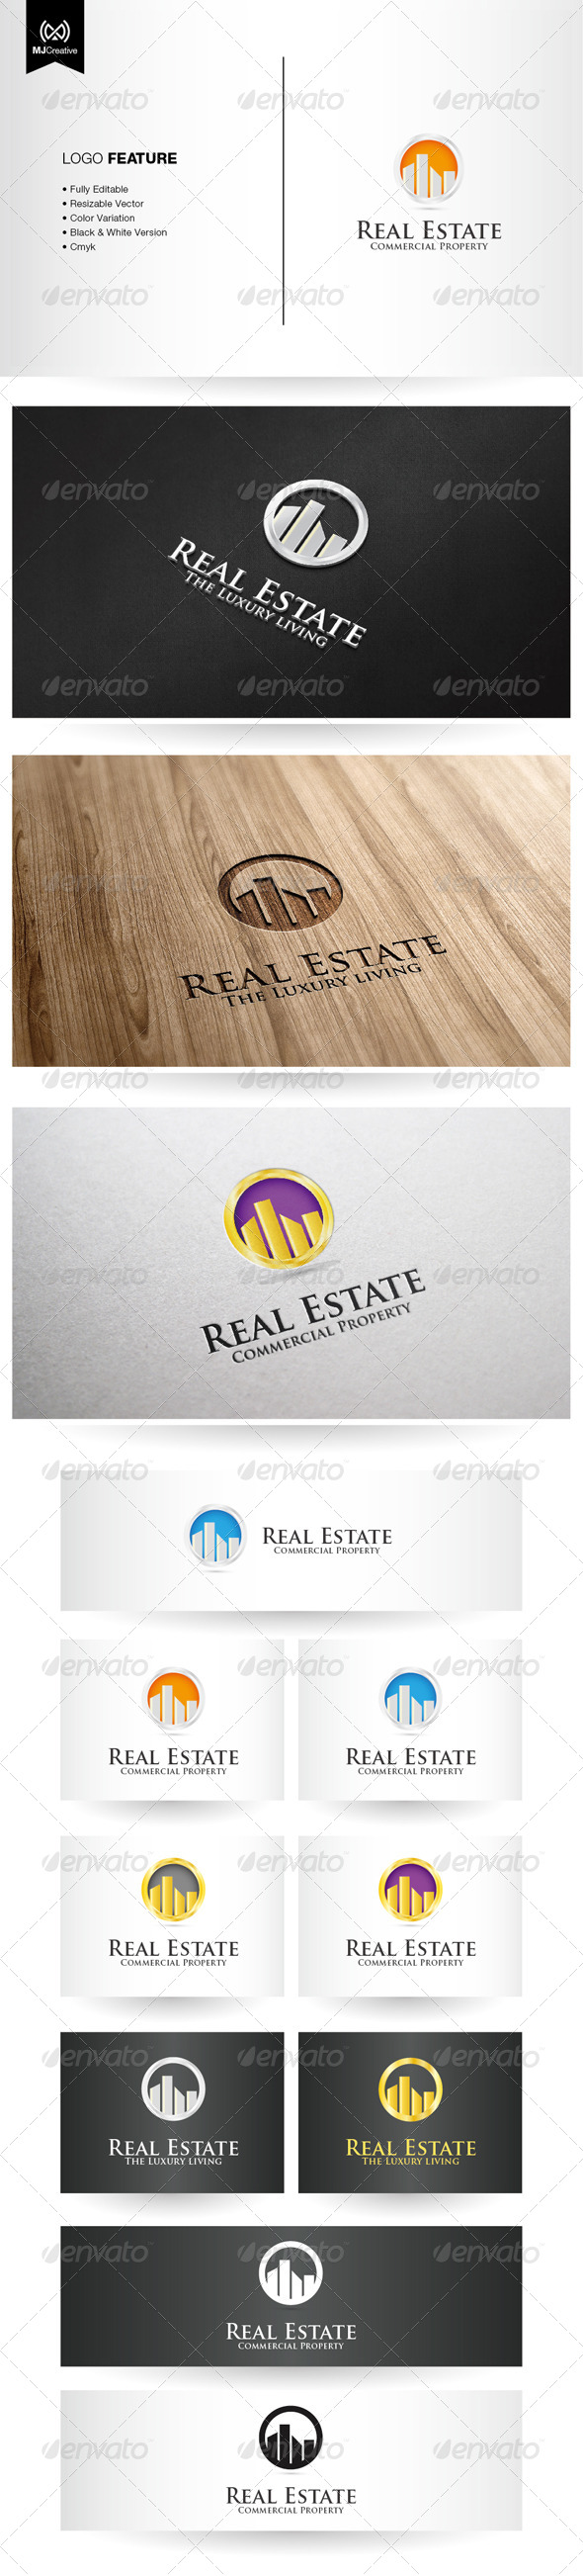 Commercial Real Estate Logo